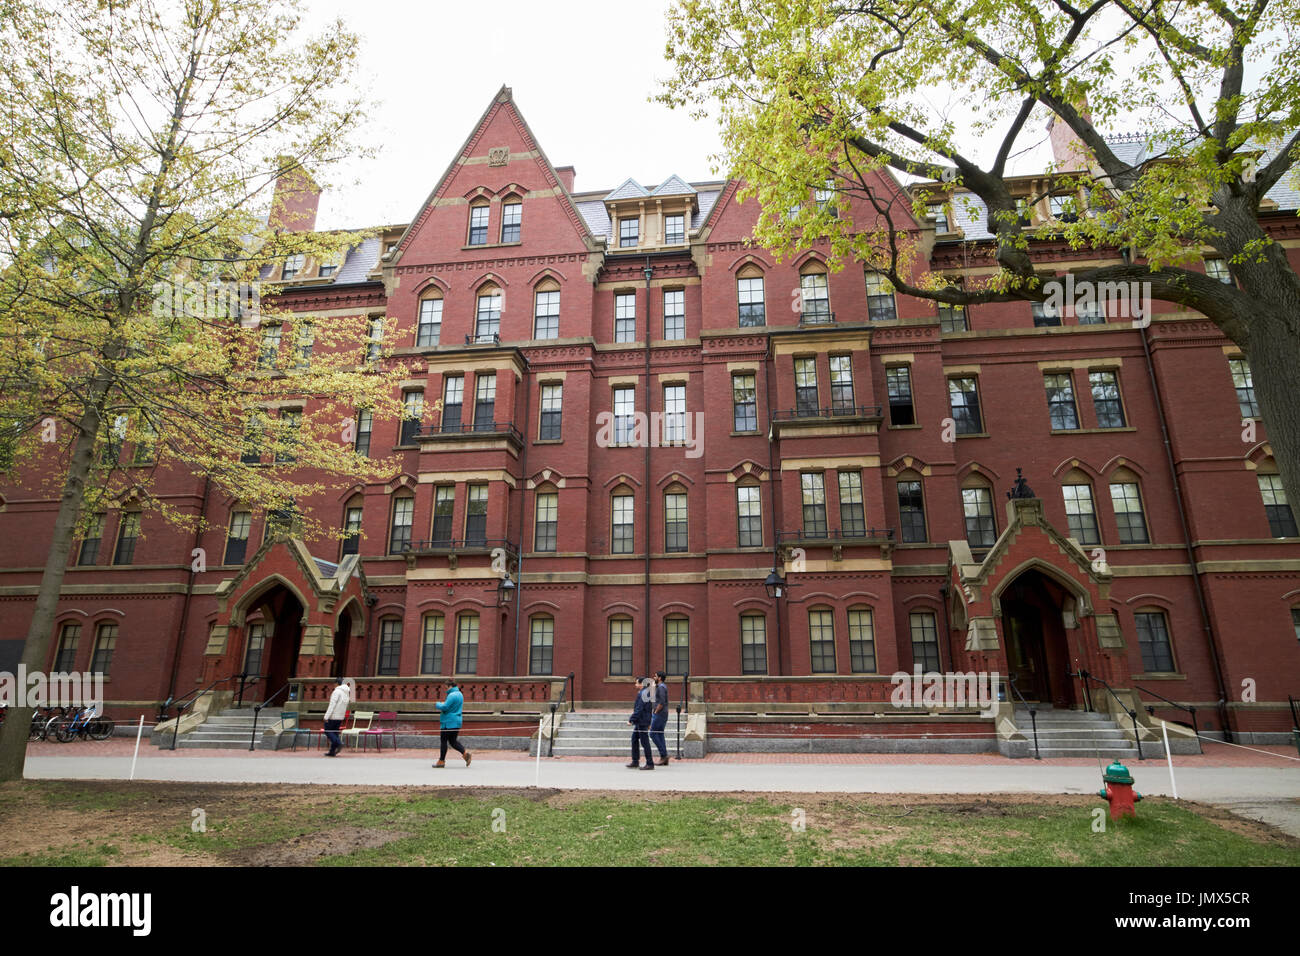 matthews hall dormitory harvard university Boston USA Stock Photo